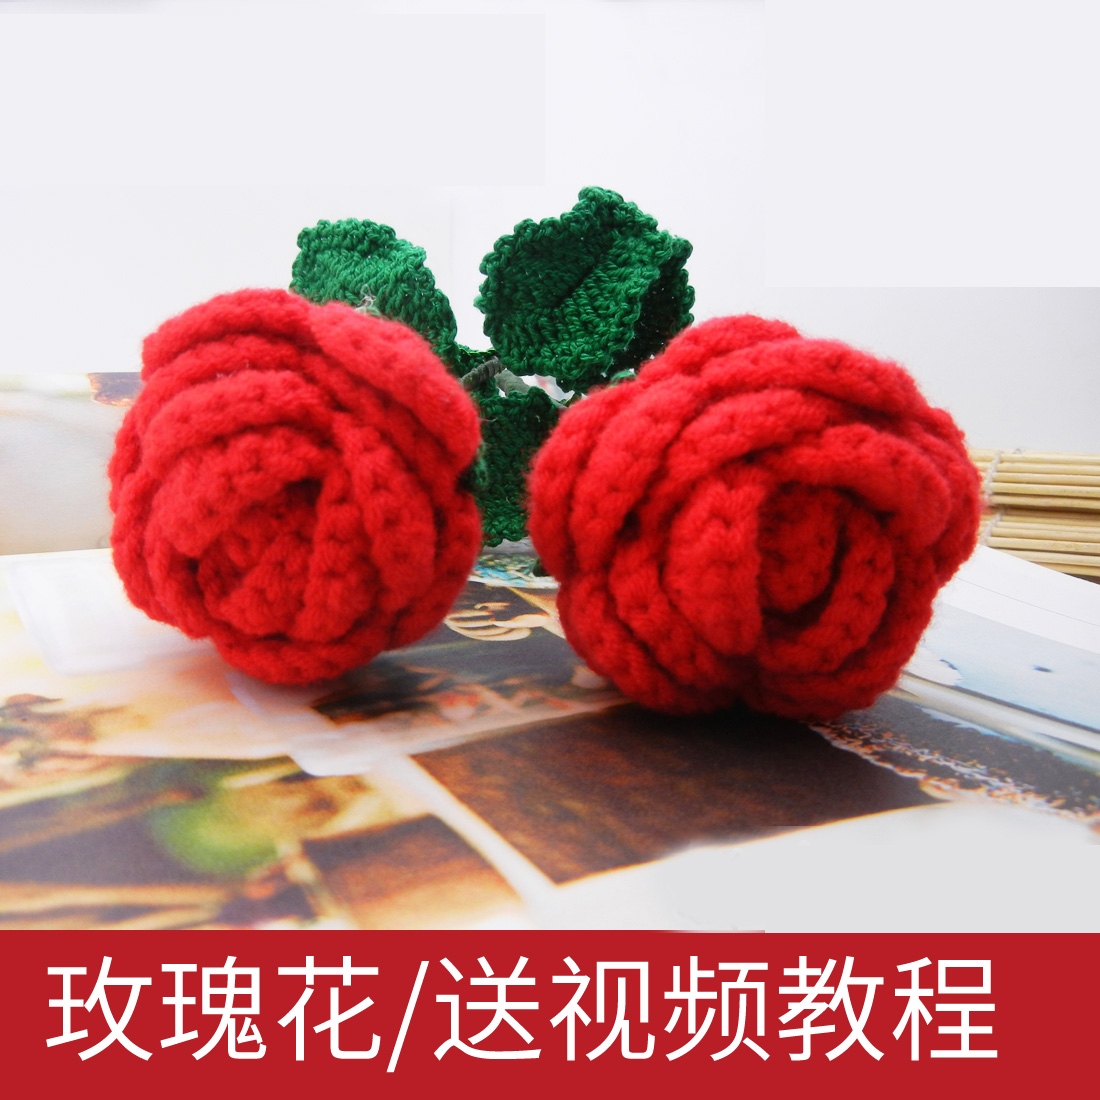 Shangmei Handmade Crochet Knitting Wool Floral Rose Flower Accessories Illustrated Handmade DIY Tutorial Kit